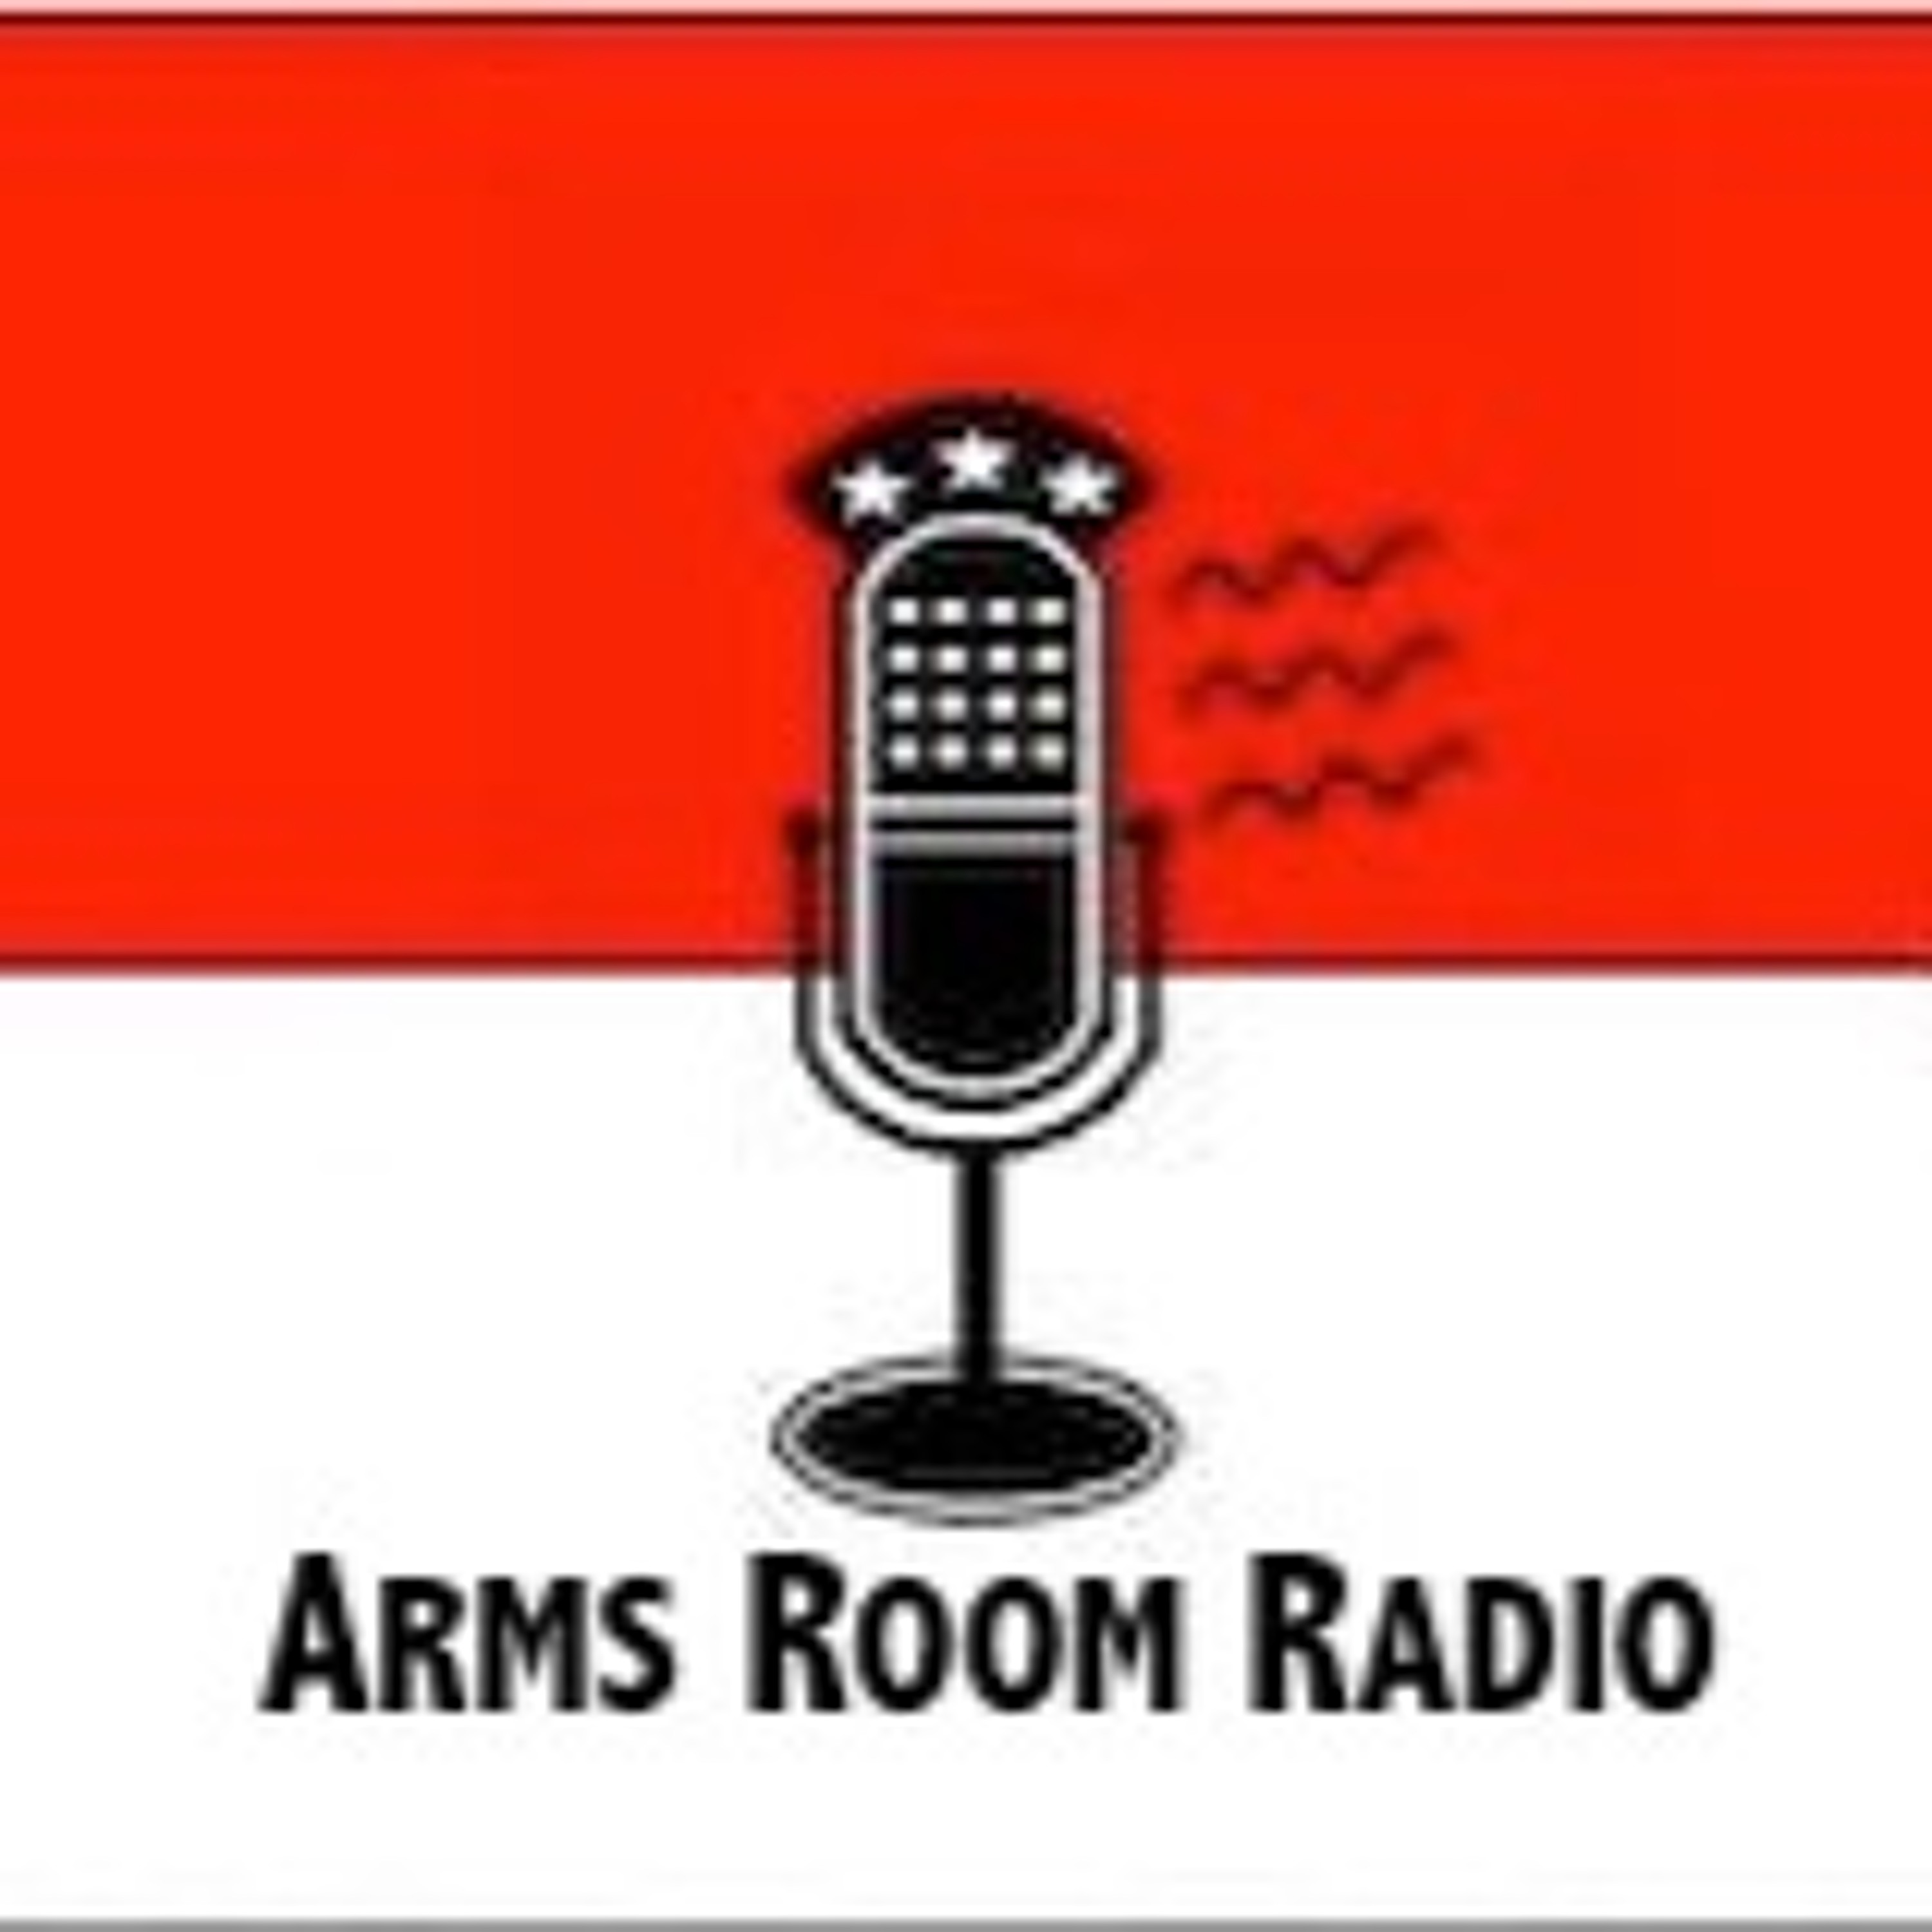 ArmsRoomRadio 01.02.21 Machine Gun care, and Chicago violence